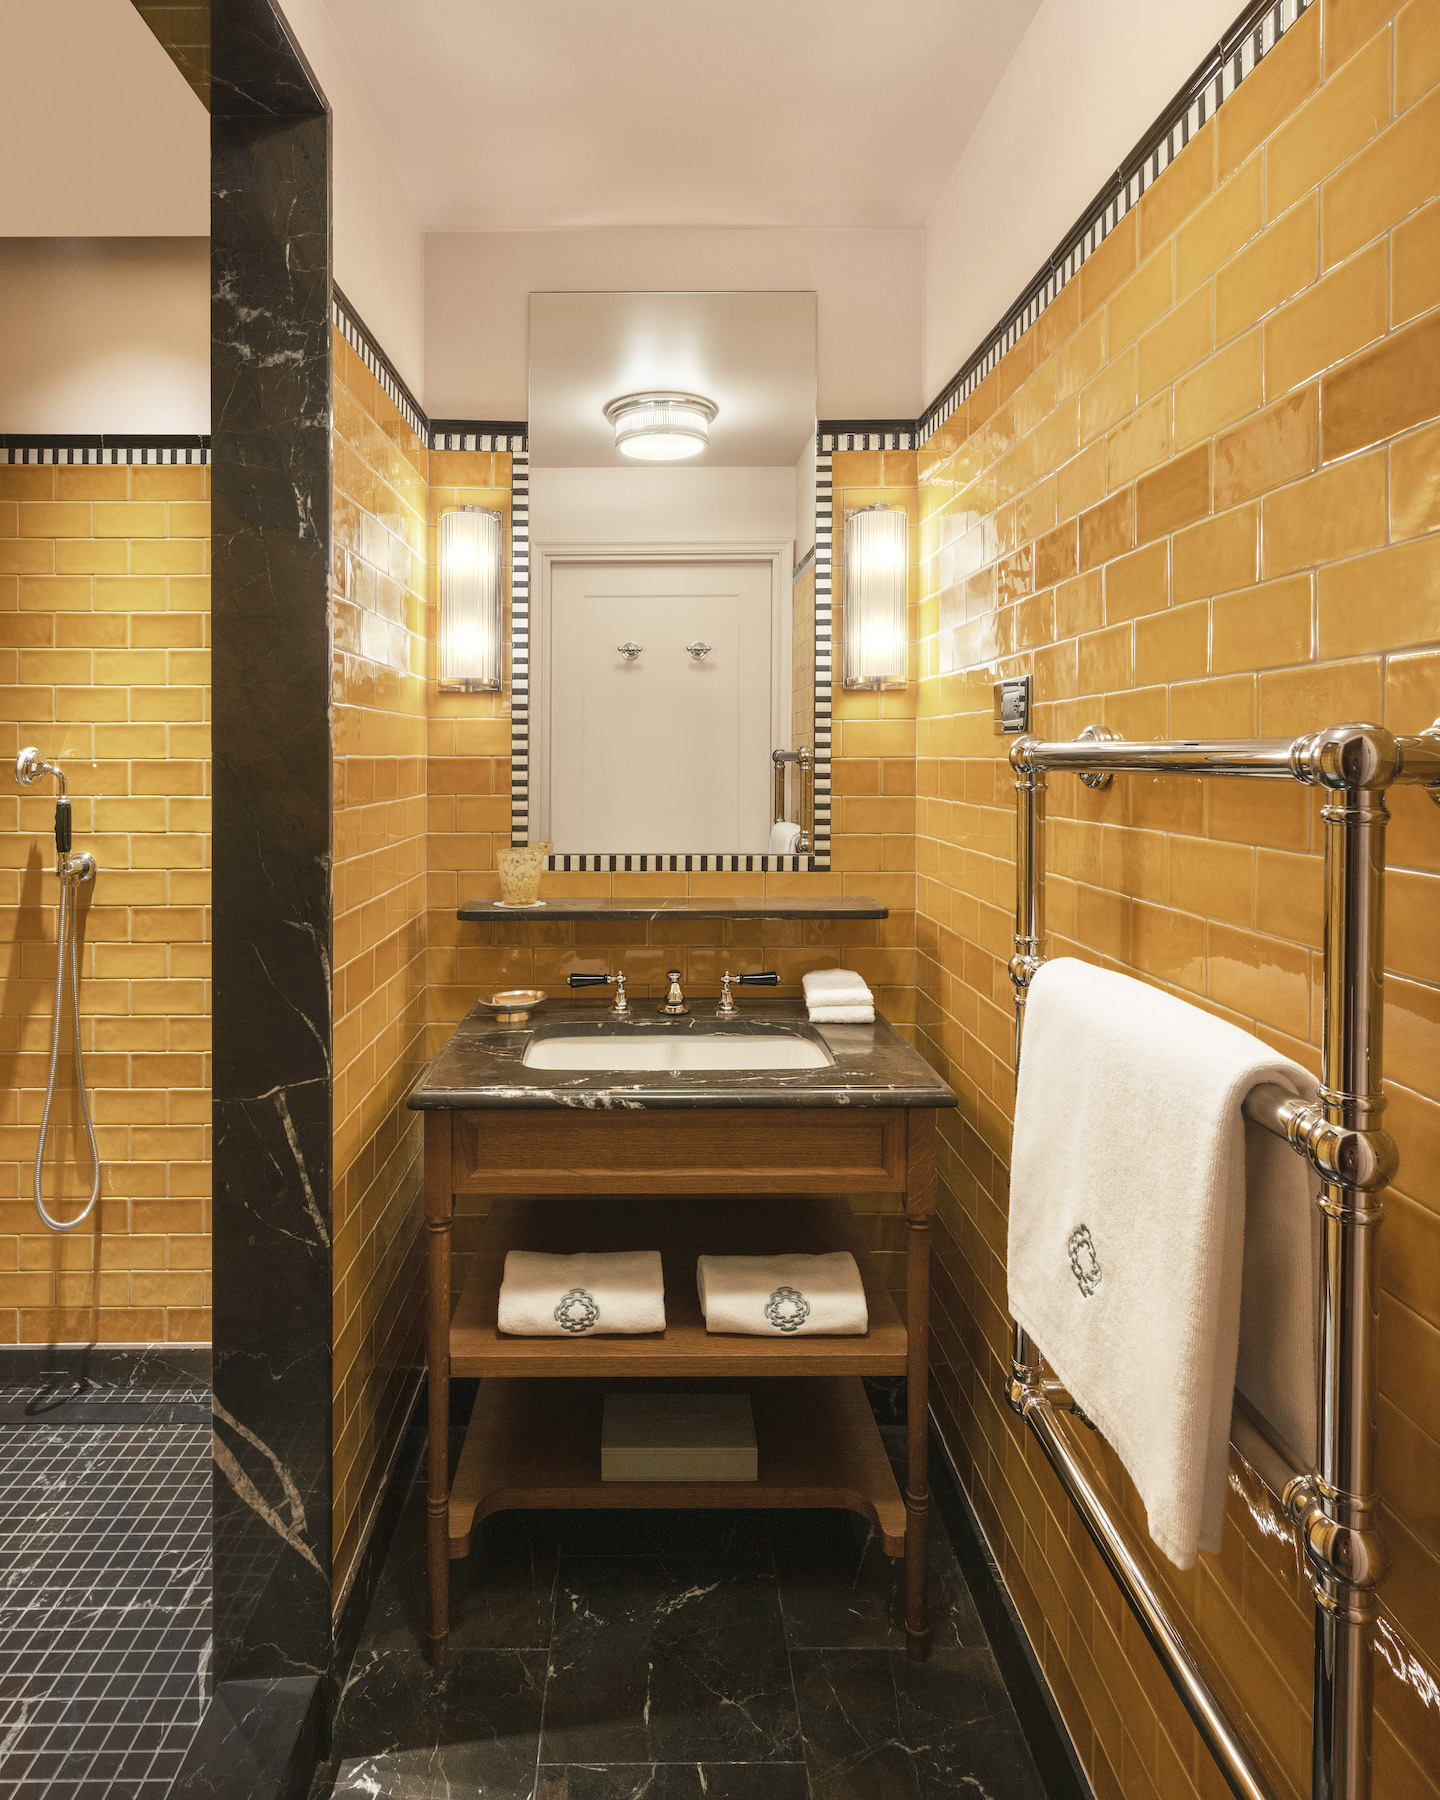 Bathroom of Le Grand Mazarin with interior design by Martin Brudnizki in Paris - Effect Magazine